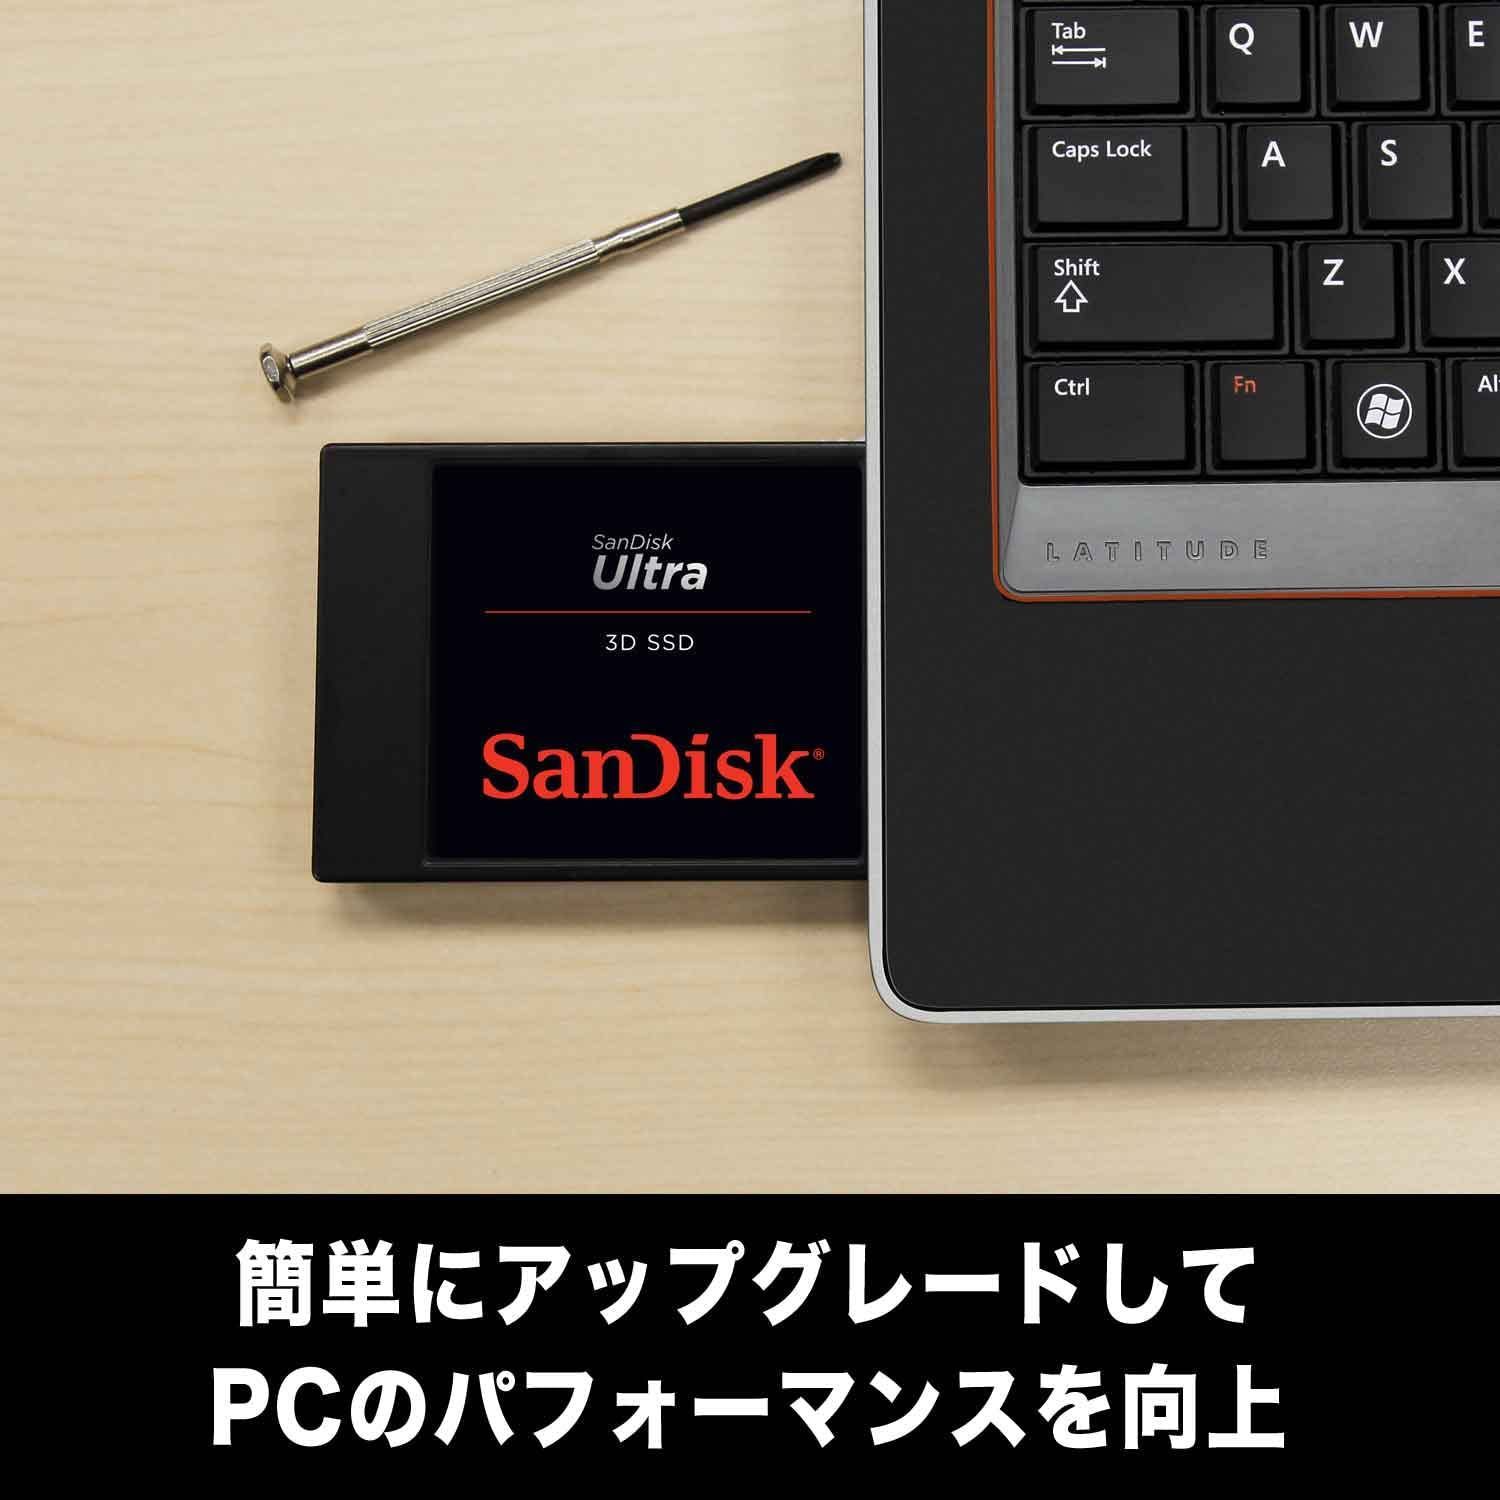 SanDisk サンディスク 内蔵 SSD Ultra 3D 1TB 2.5インチ SATA